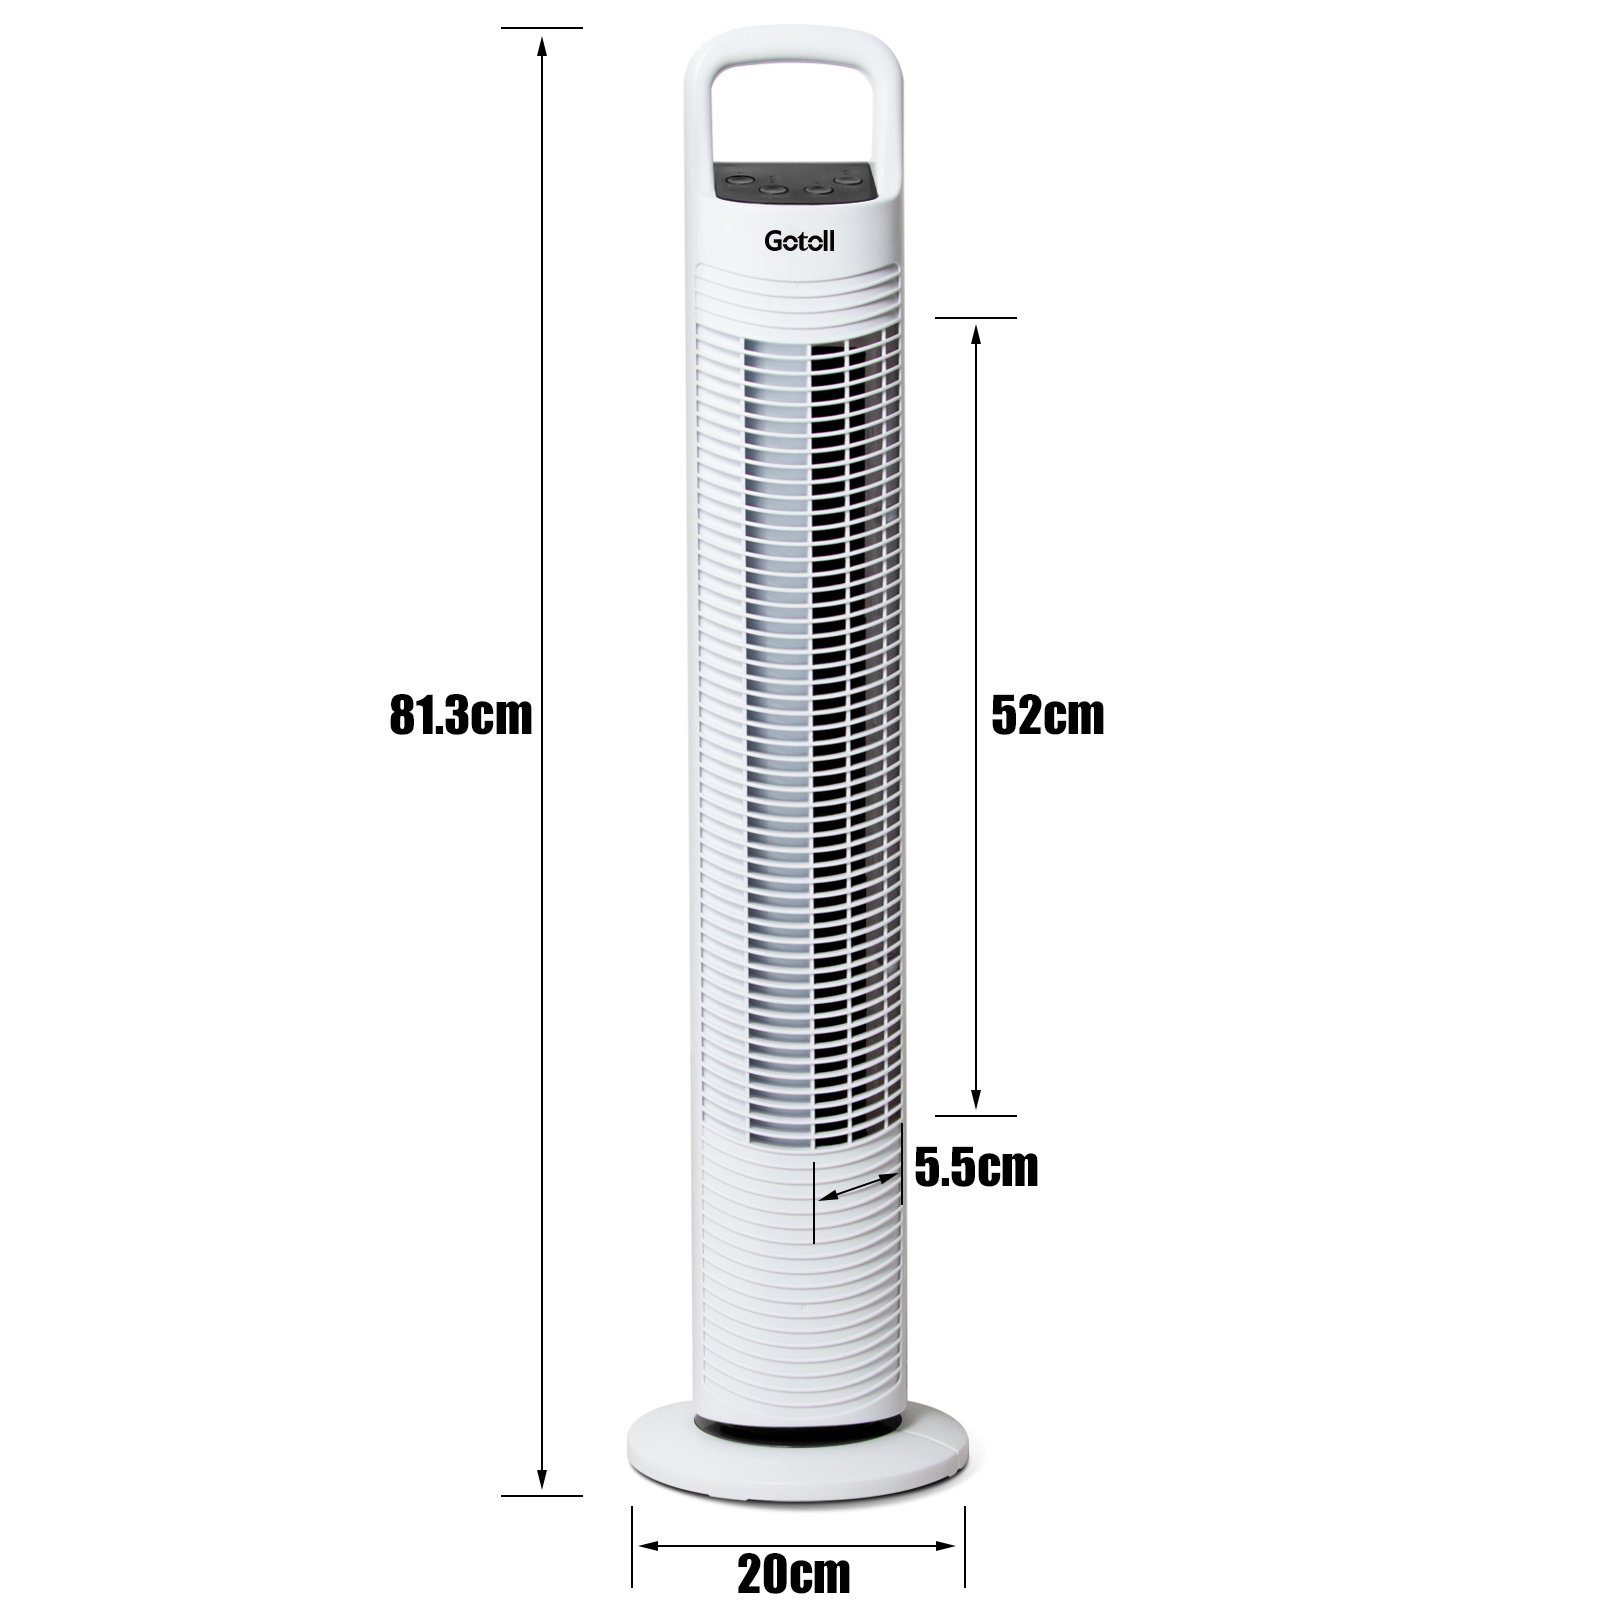 GL302R, Säulenventilator Gotoll 70° Leise mit 81.3cm Towerventilator Turmventilator Fernbedienung